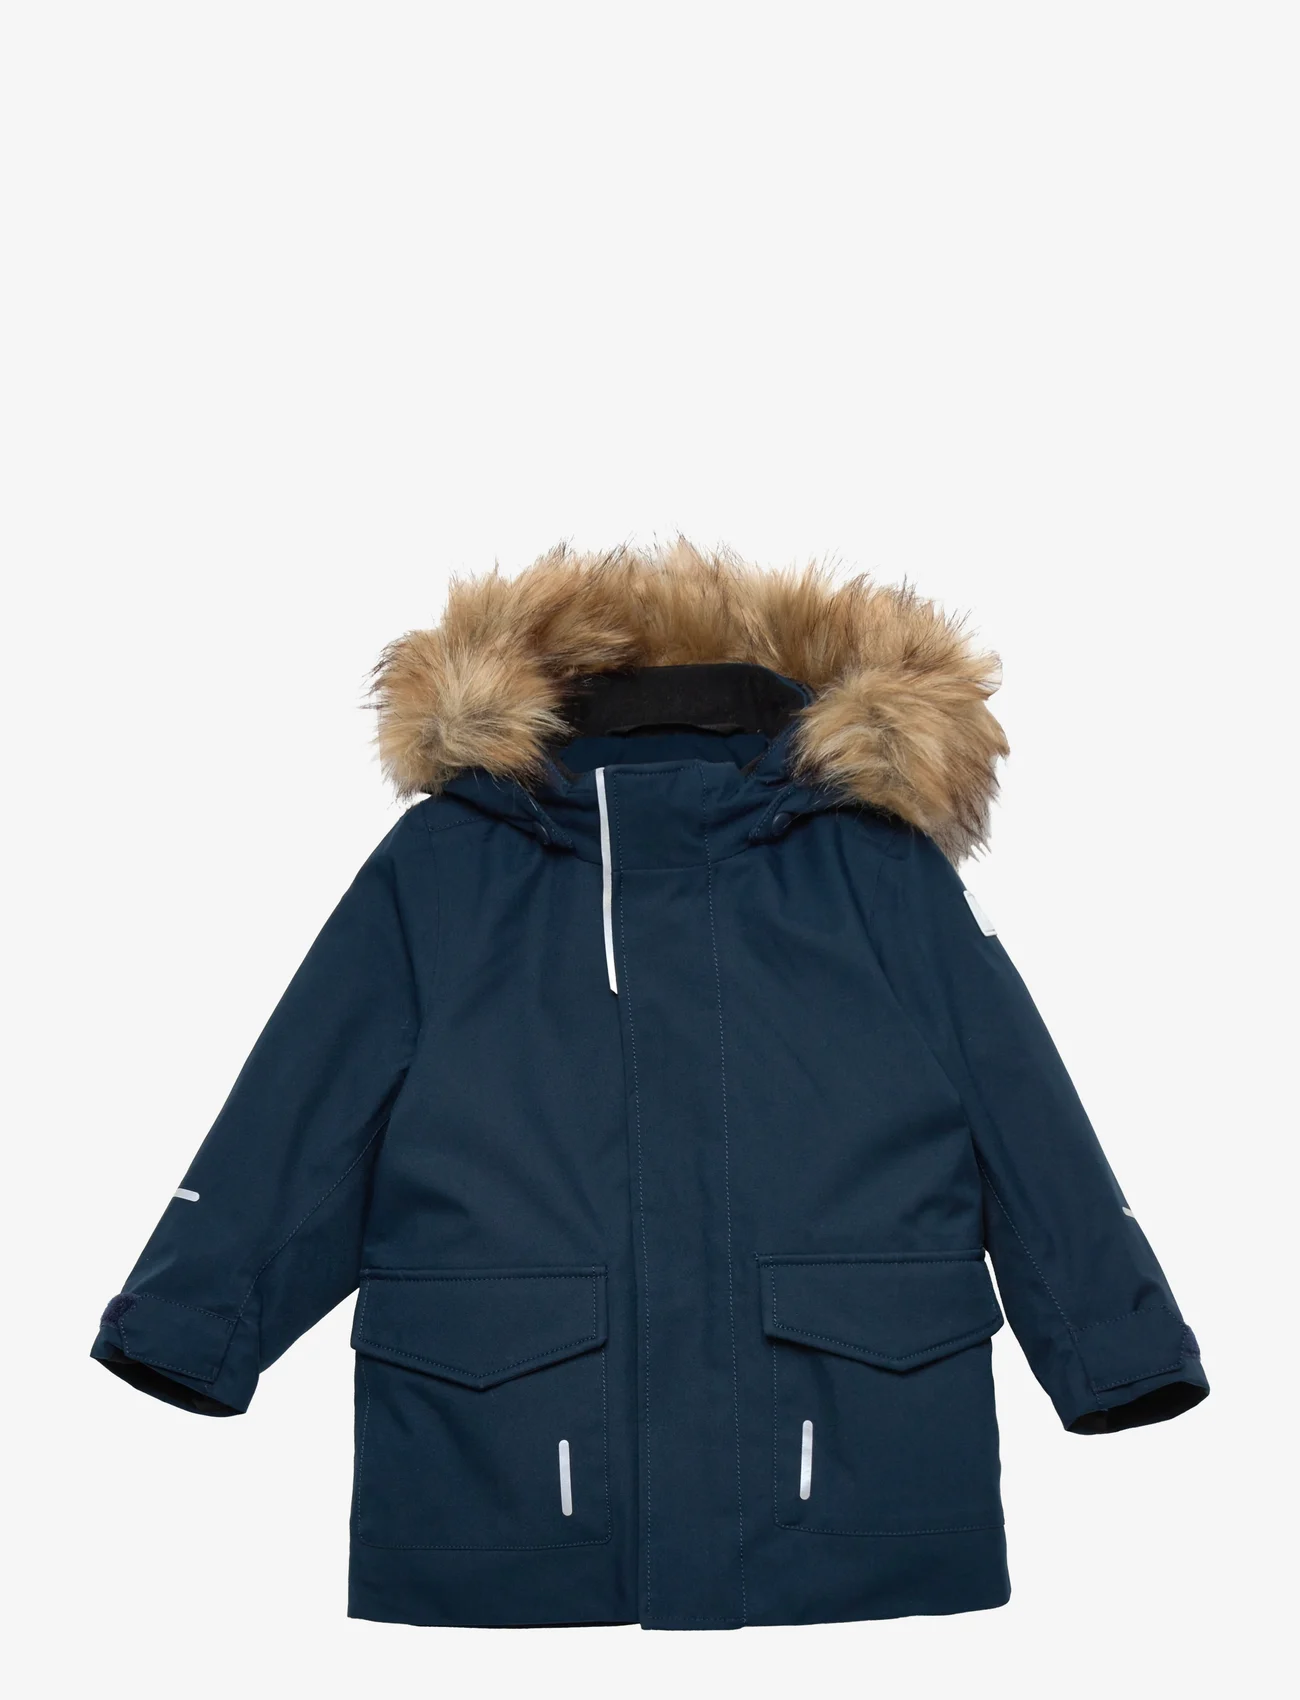 Reima - Reimatec winter jacket, Mutka - parkad - navy - 0